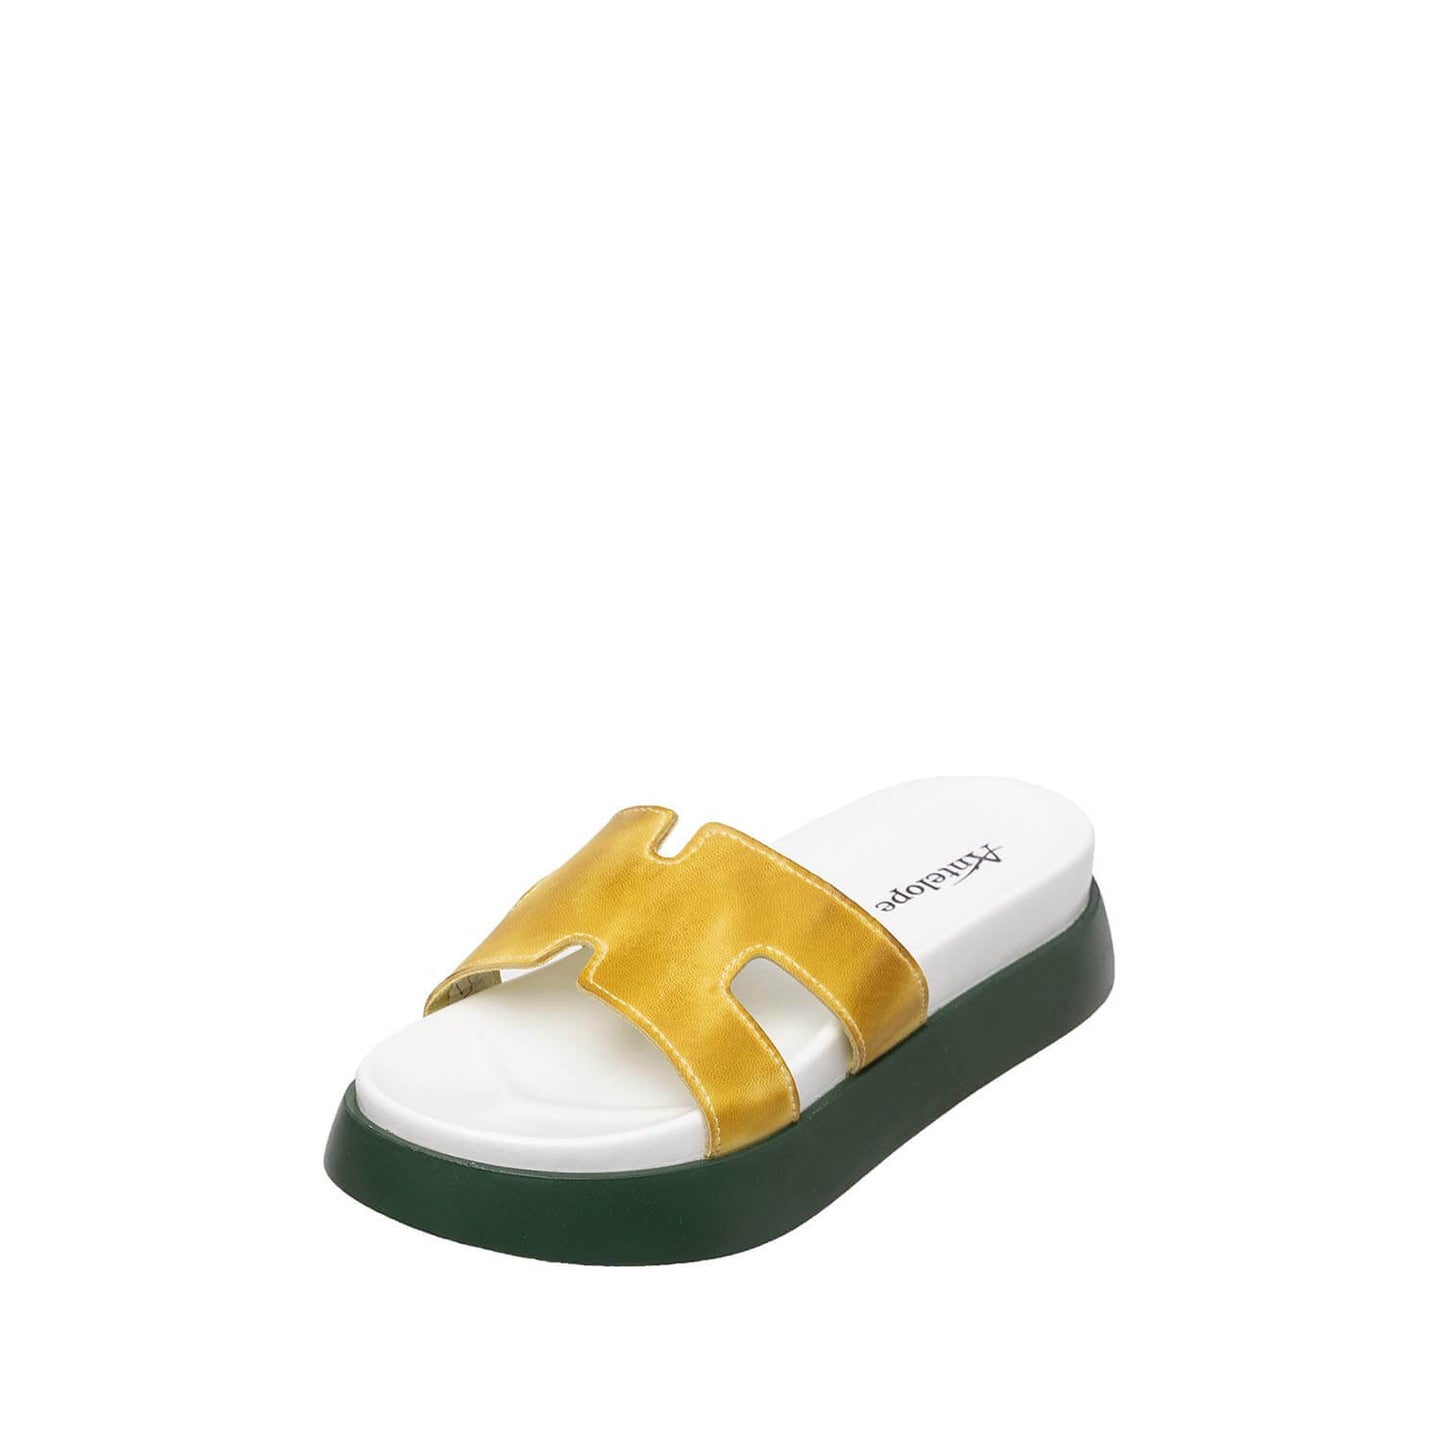 S50 Savvy Designer Flat Sandals for Women in Mustard